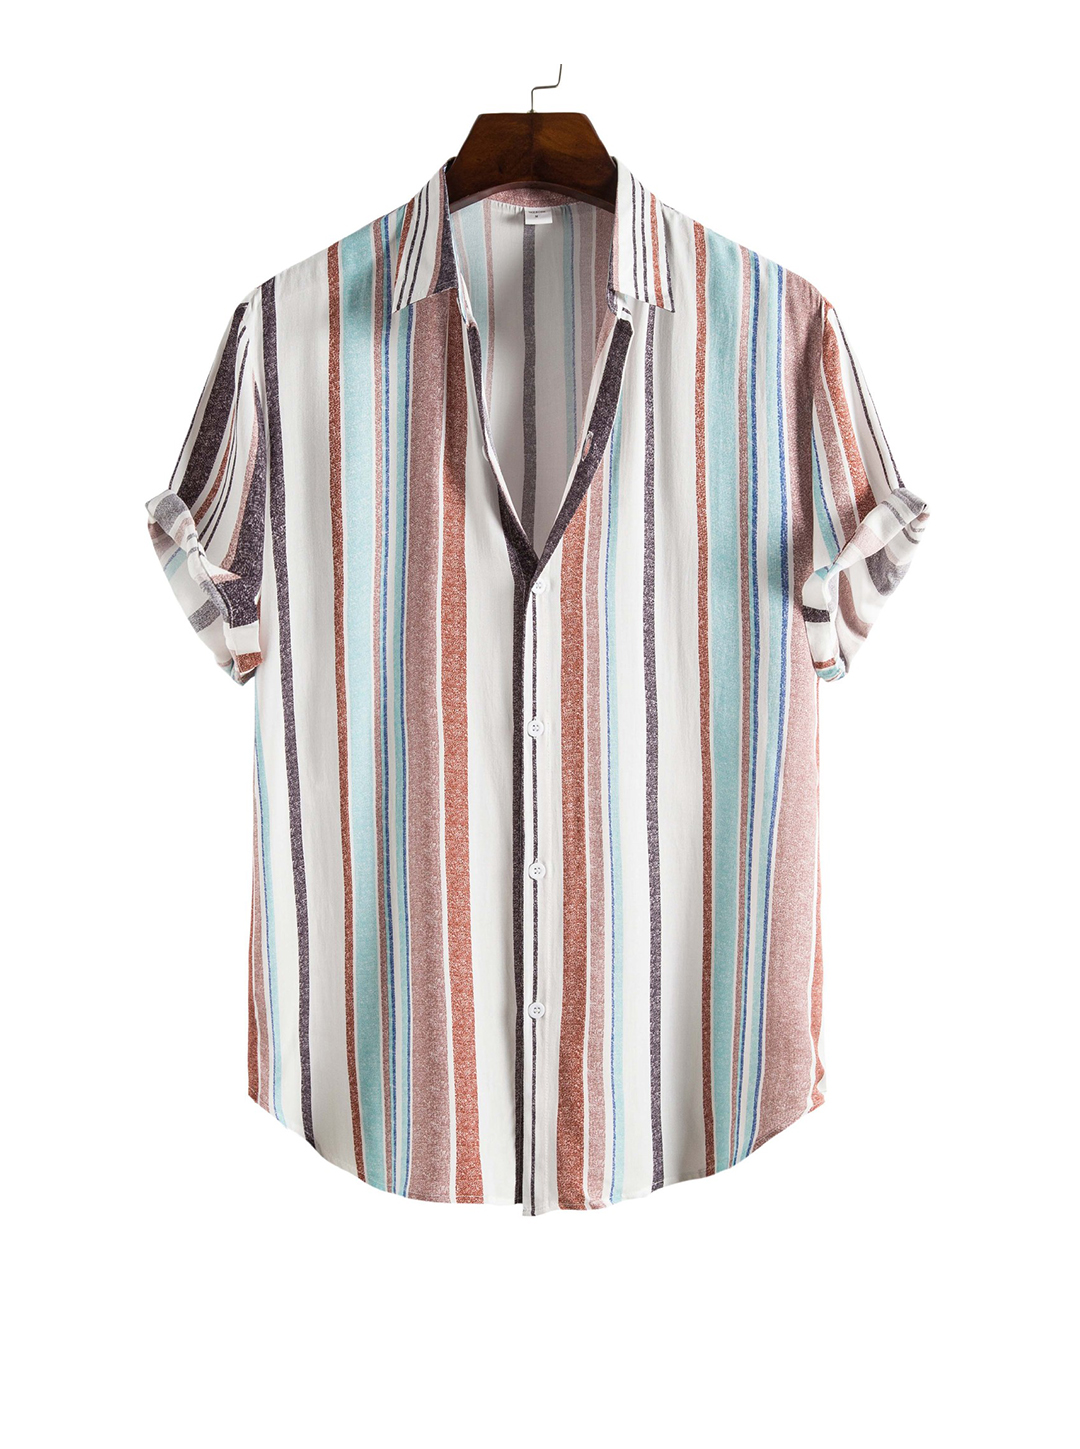 Poisonstreetwear Men's Colourful Striped Print Beach Shirt Short Sleeve Casual Retro-poisonstreetwear.com